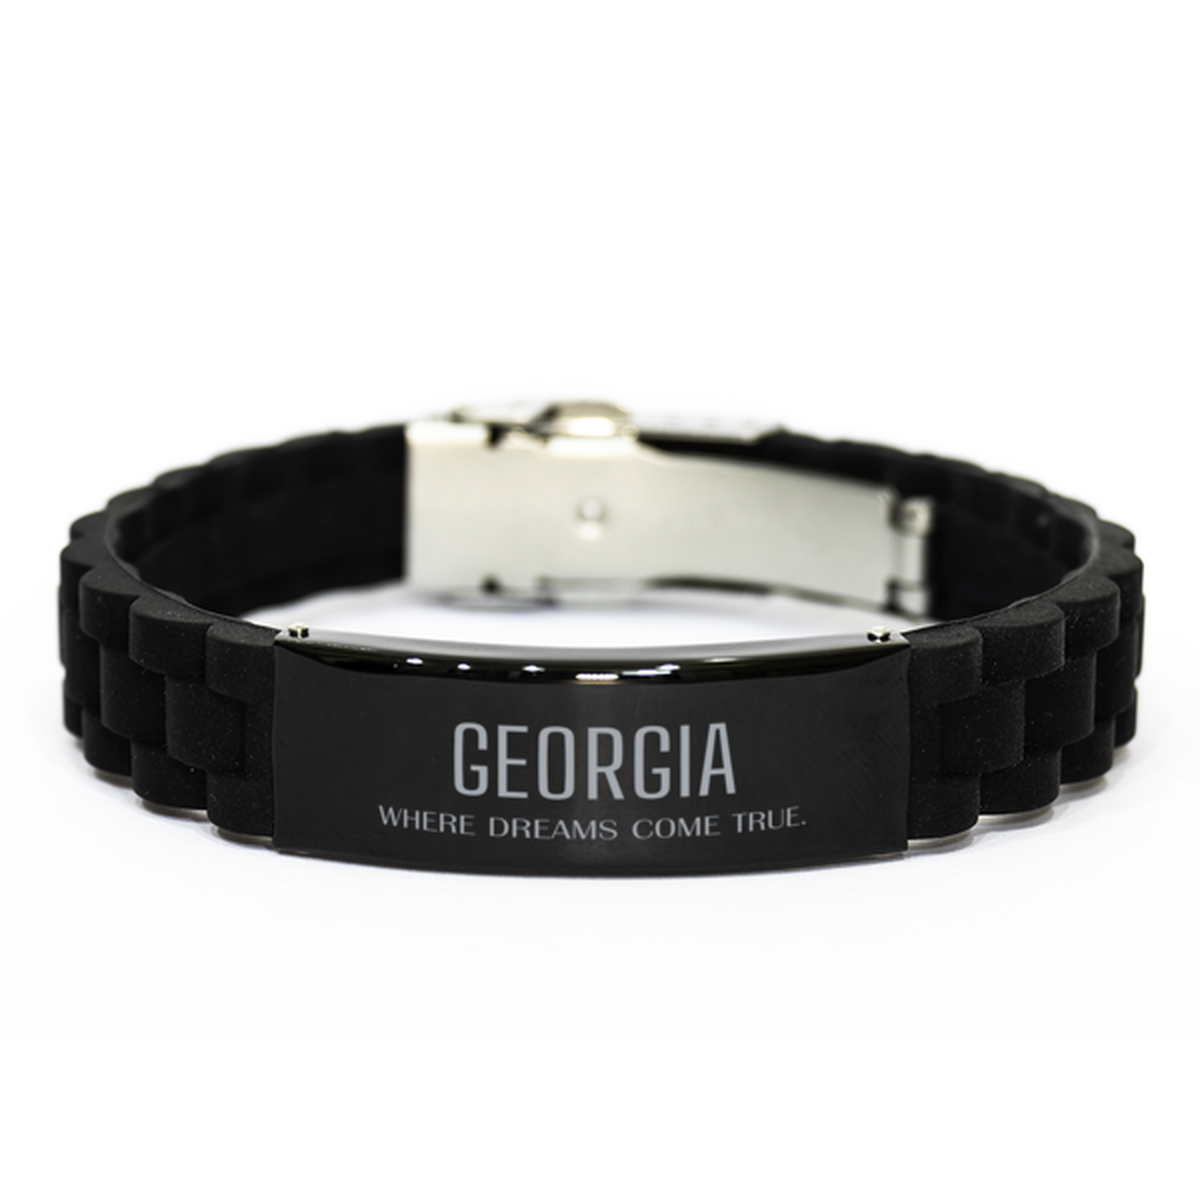 Love Georgia State Black Glidelock Clasp Bracelet, Georgia Where dreams come true, Birthday Inspirational Gifts For Georgia Men, Women, Friends